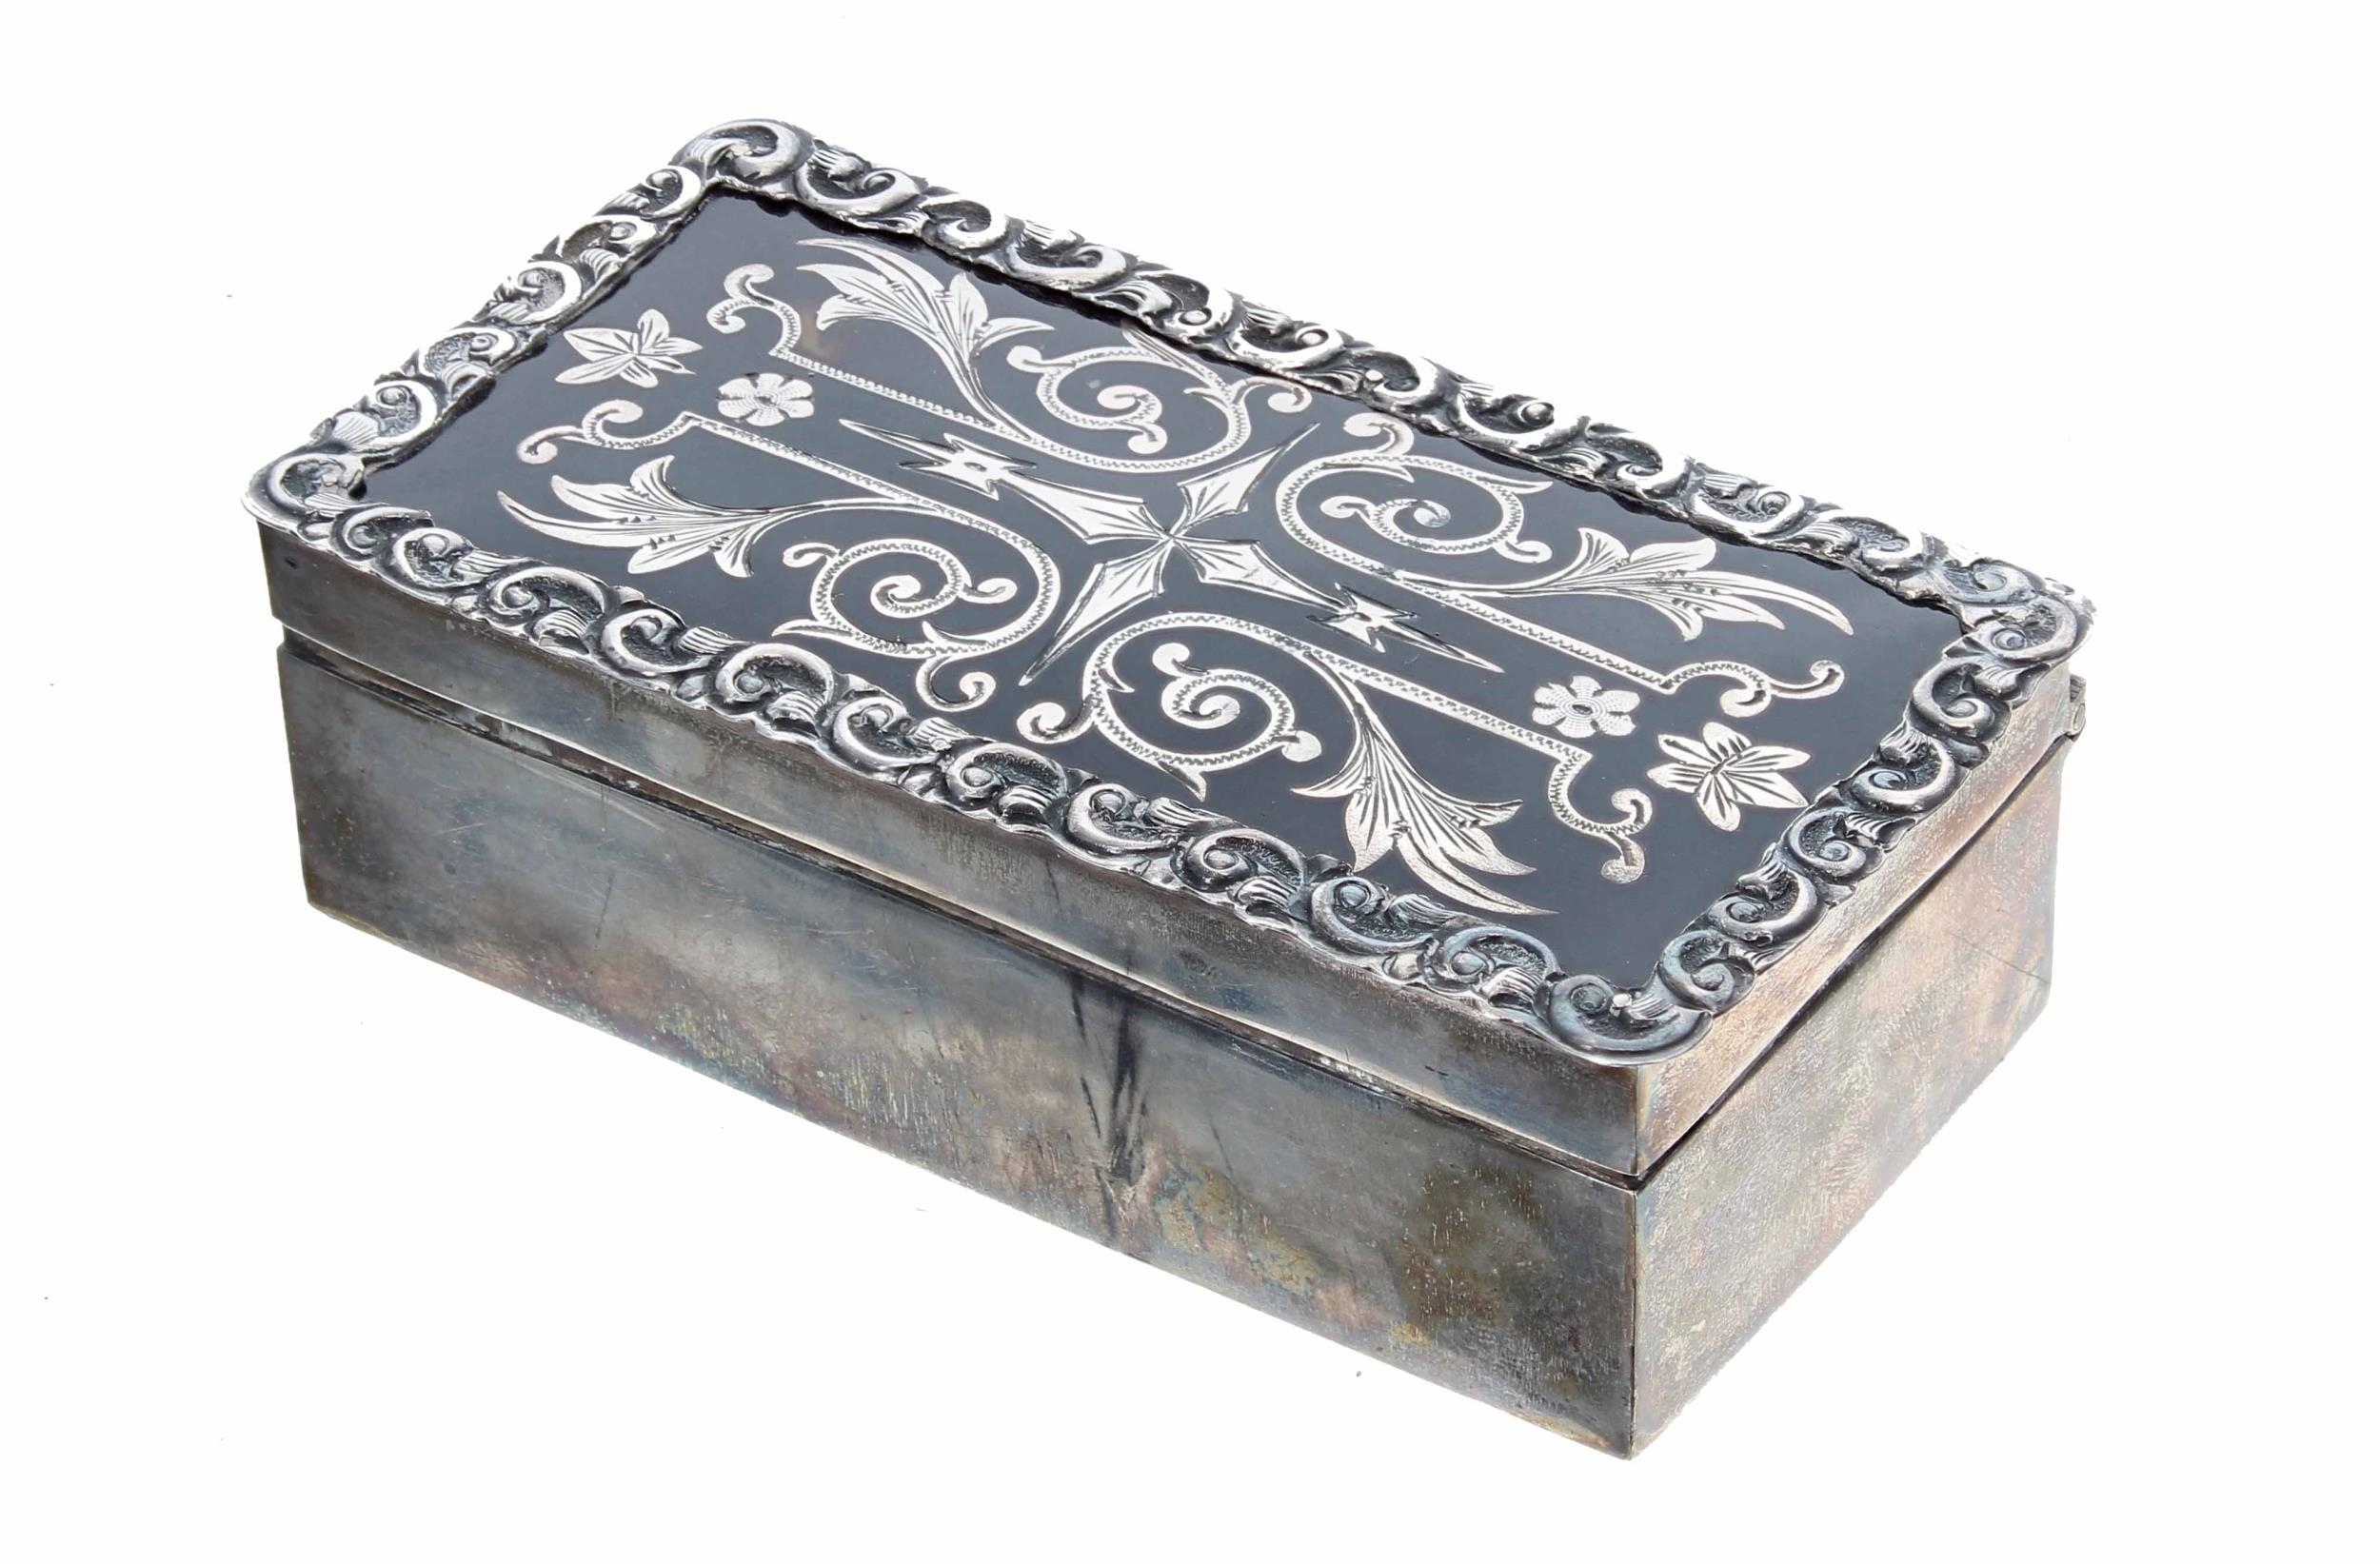 Walker & Hall silver and tortoiseshell trinket box, the foliate pique tortoiseshell hinged cover